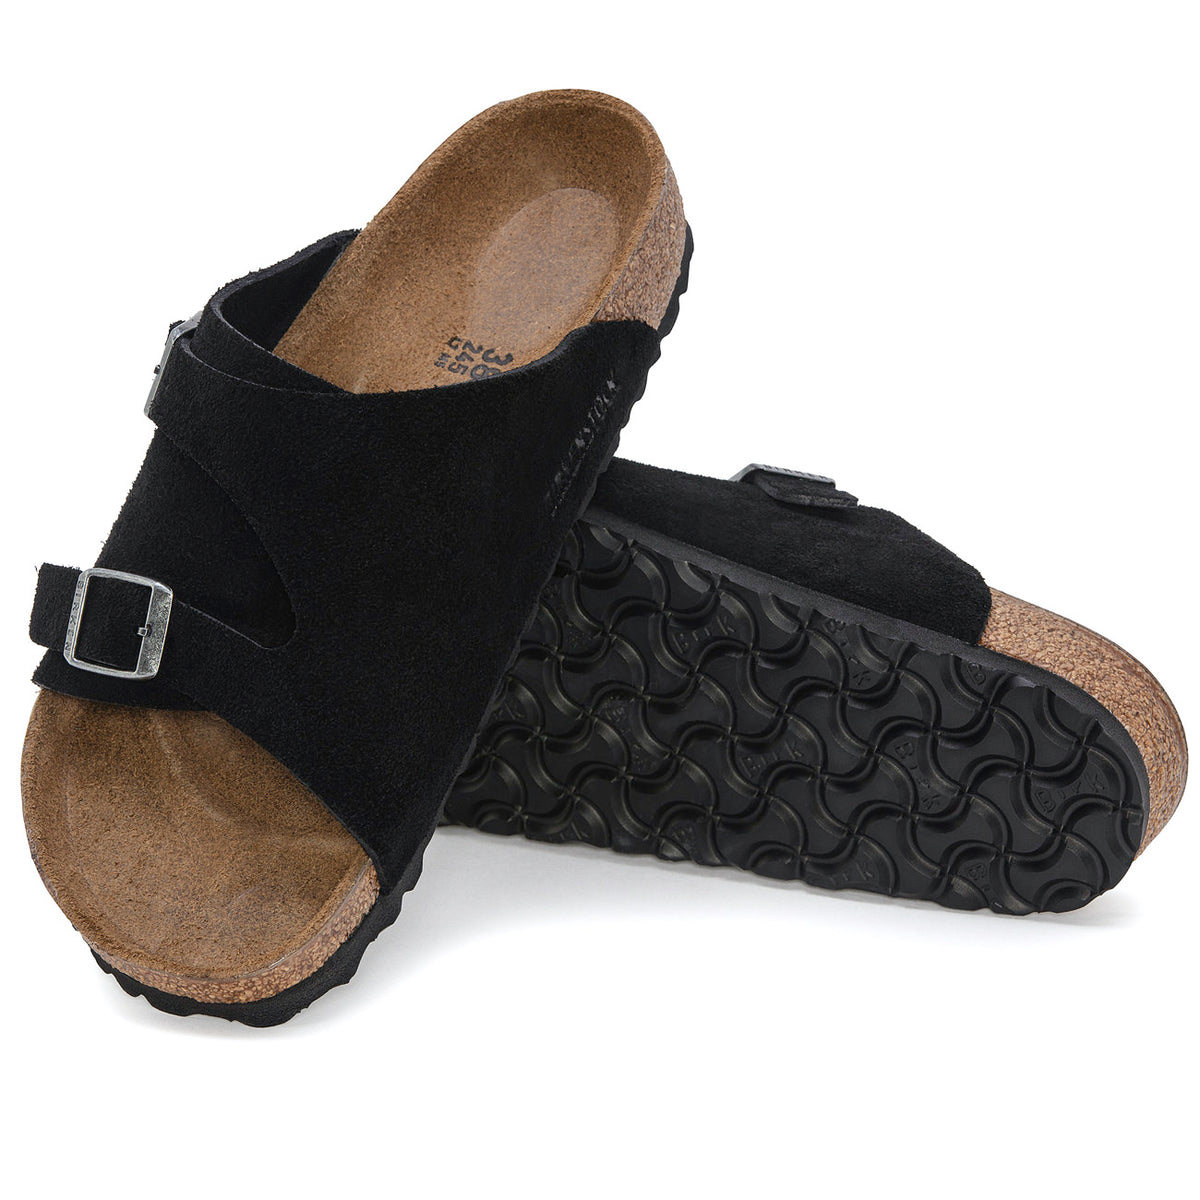 Birkenstock Zurich, Narrow Fit, Suede Leather, Soft Footbed, Black